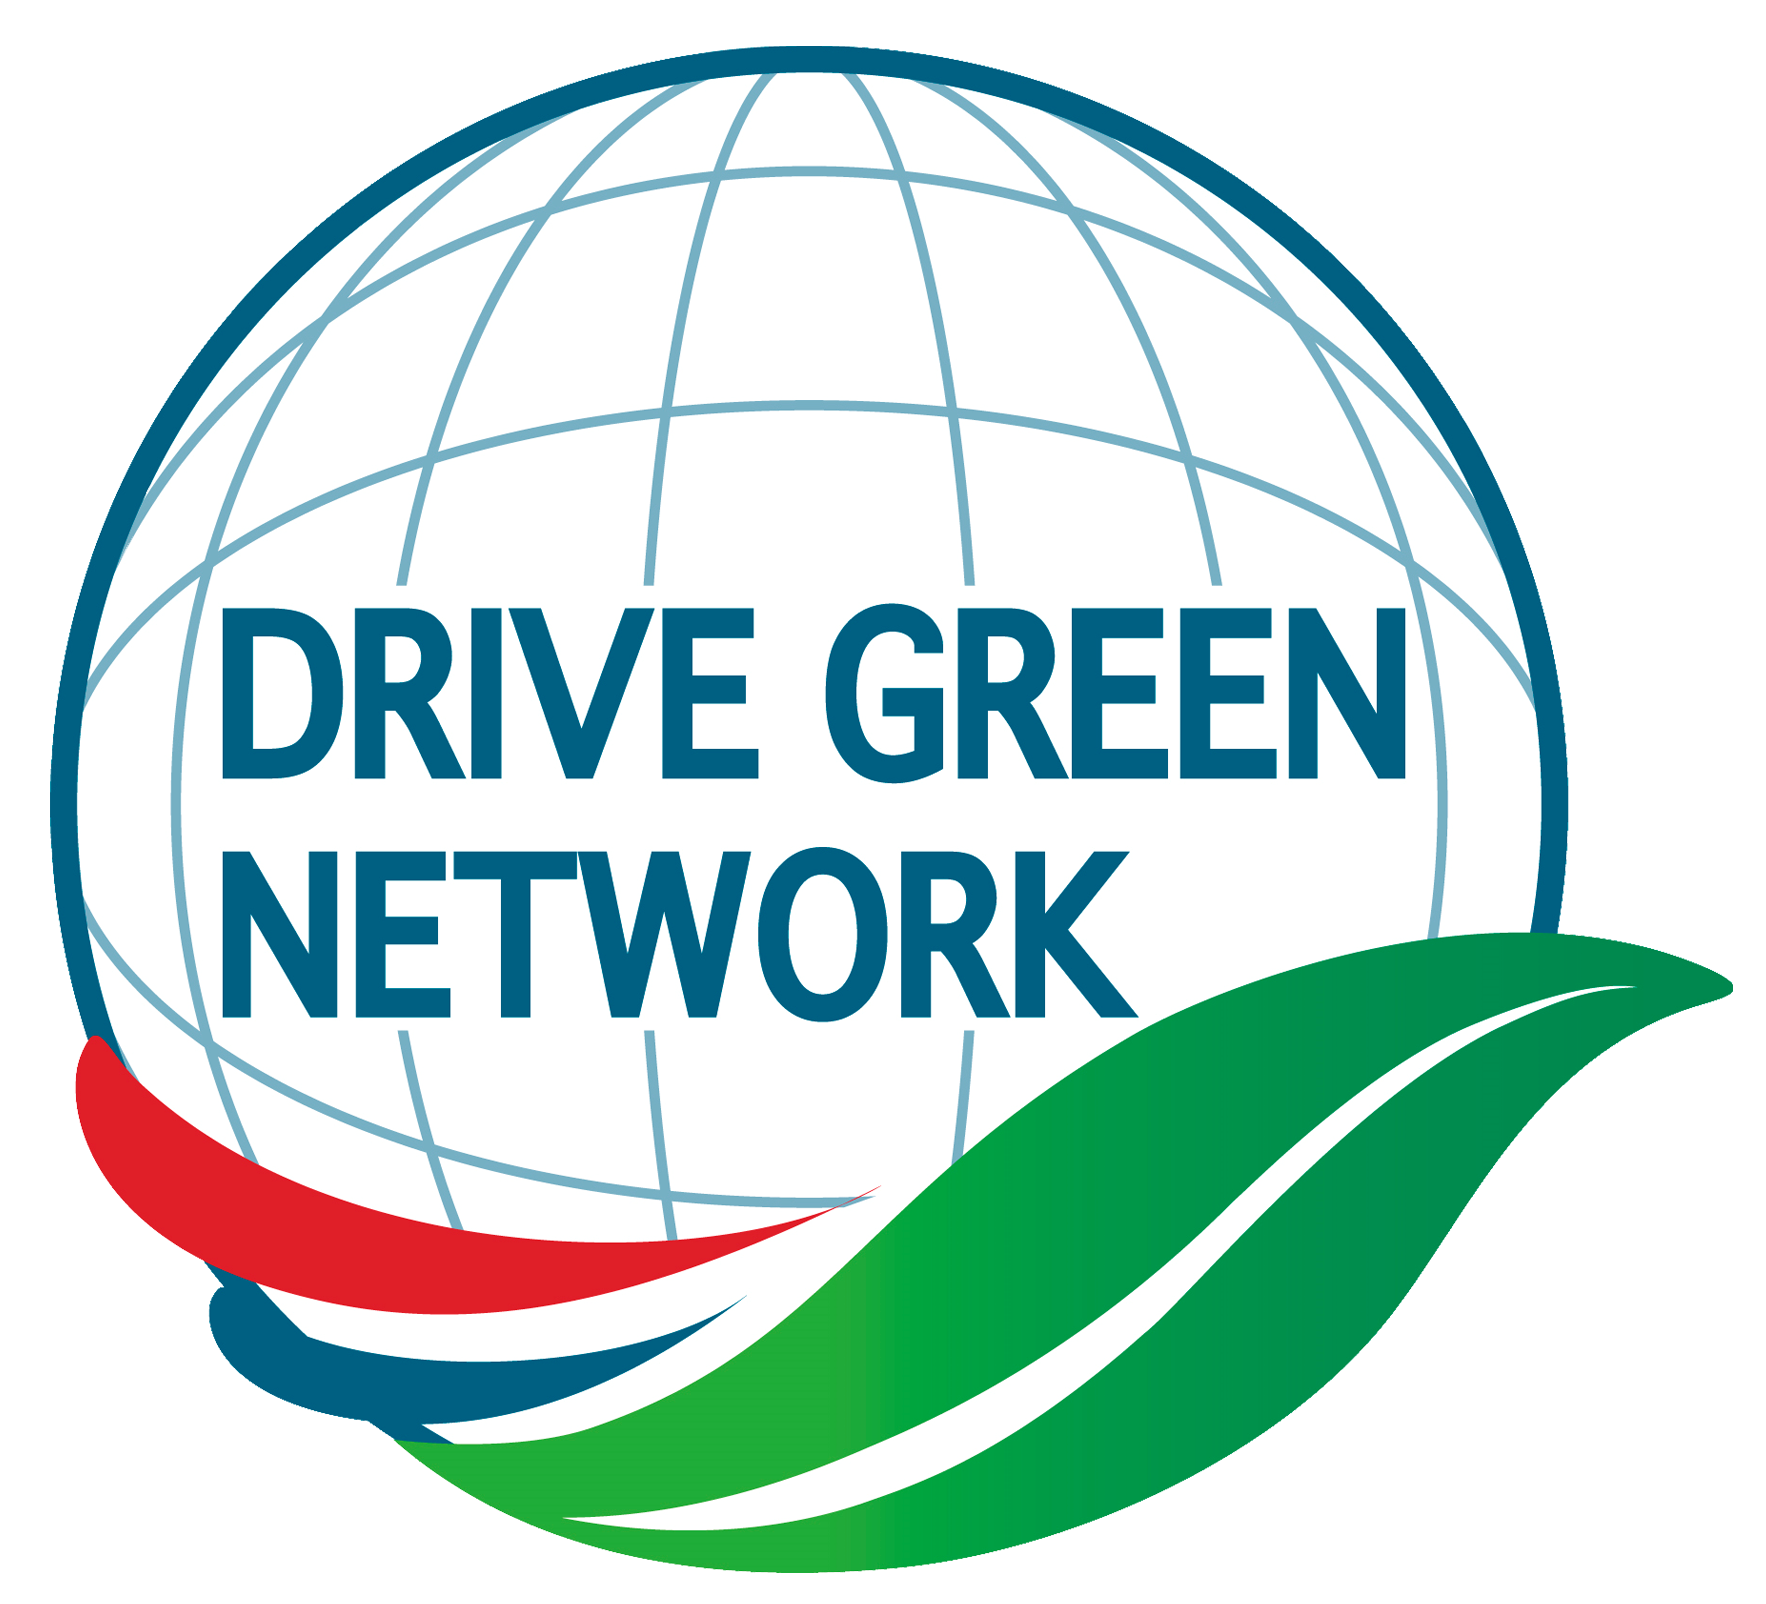 DRIVE GREEN NETWORK